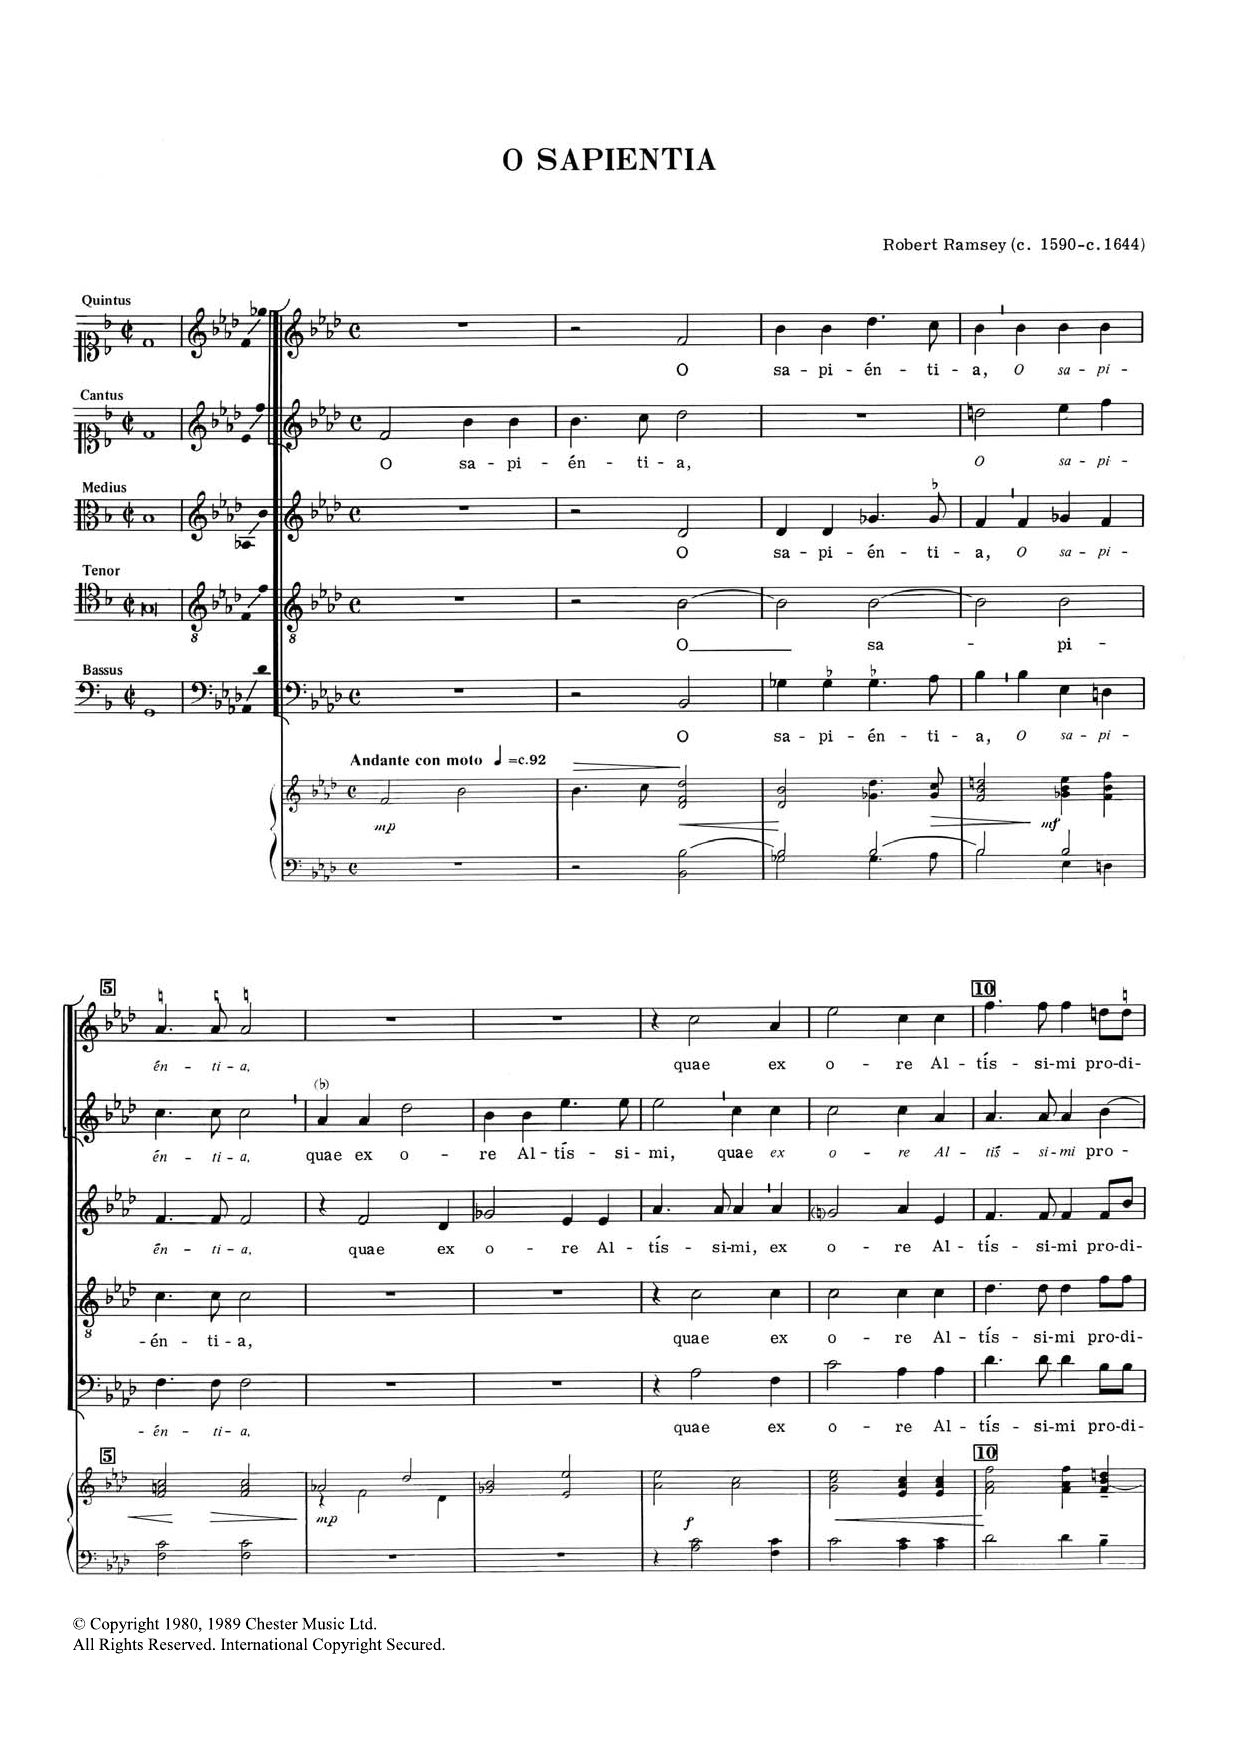 Robert Ramsey O Sapientia Sheet Music Notes & Chords for Choral SAATB - Download or Print PDF